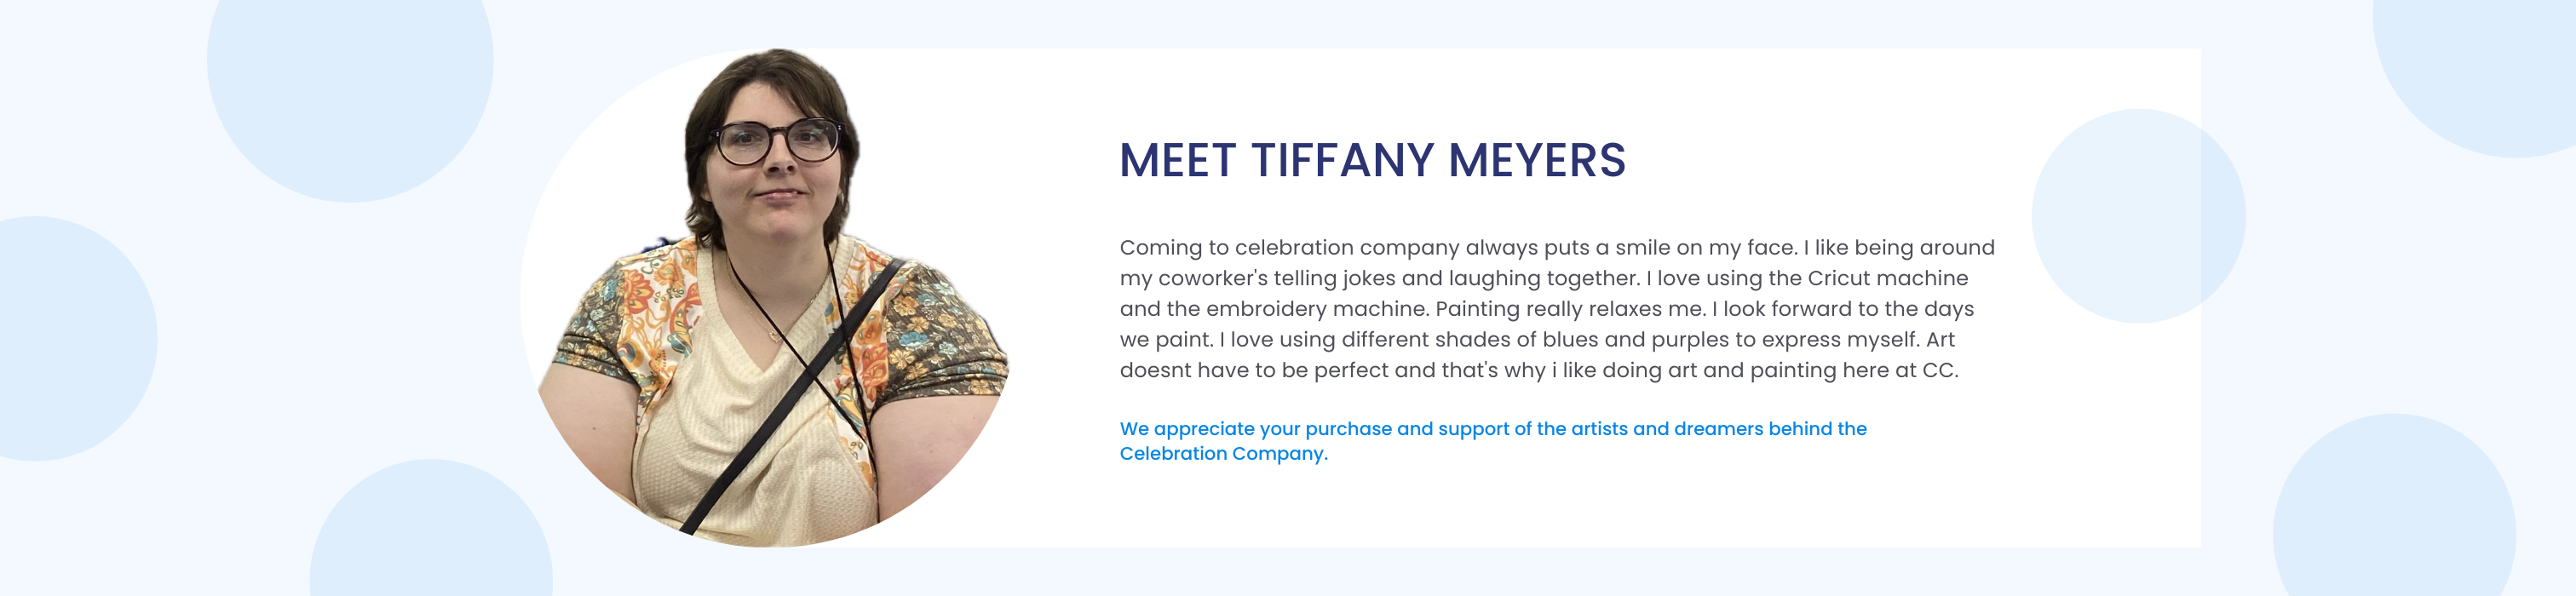 Meet tiffany meyers